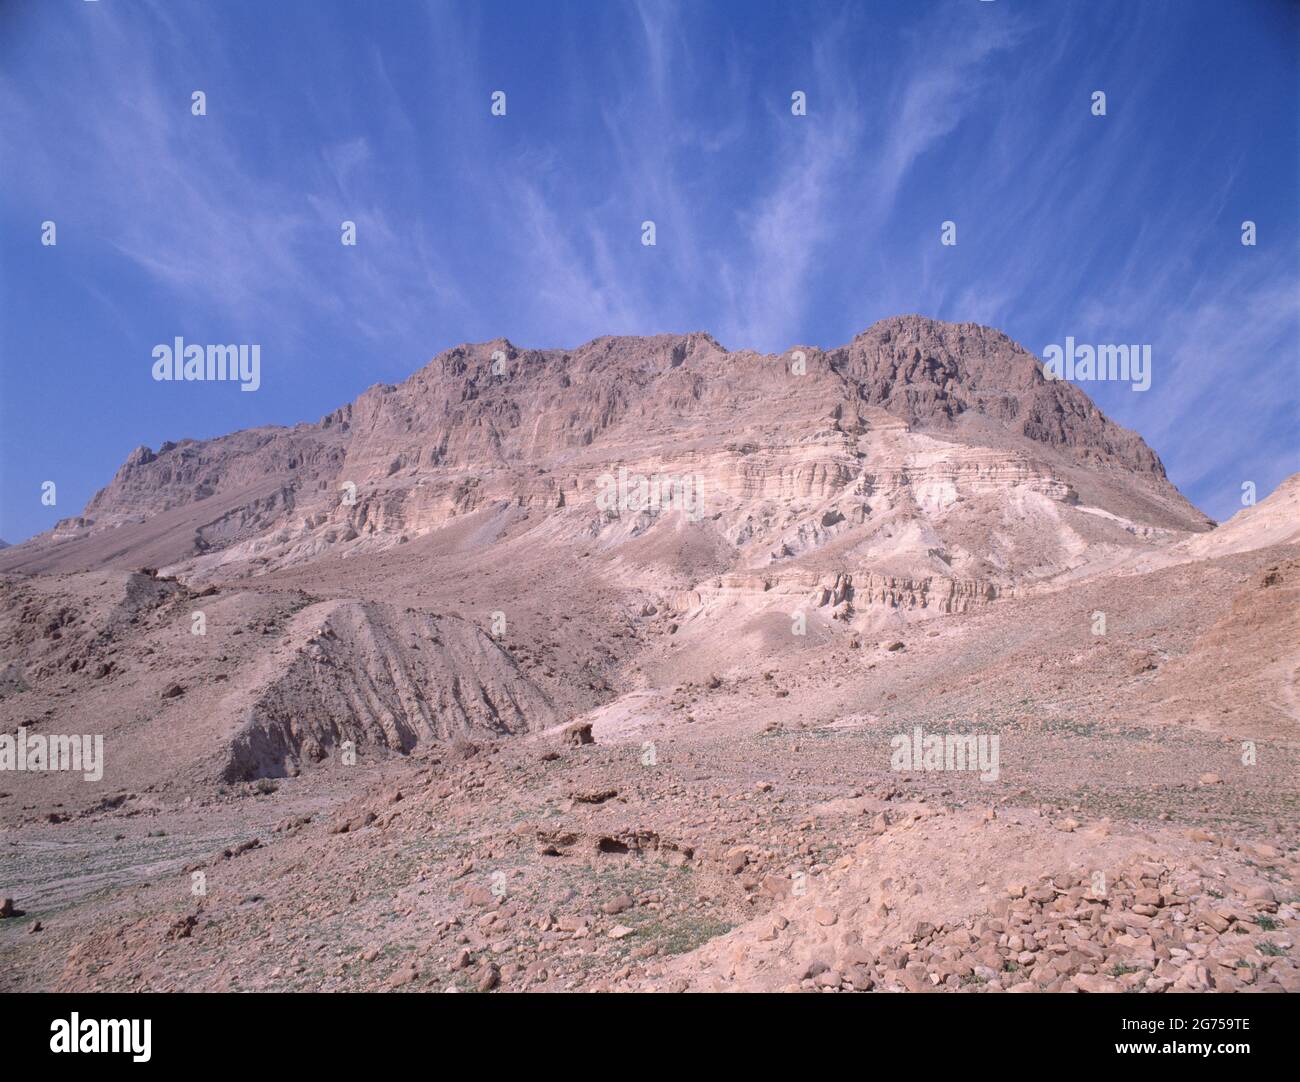 Israel.  Mountain in the Negev desert. Stock Photo